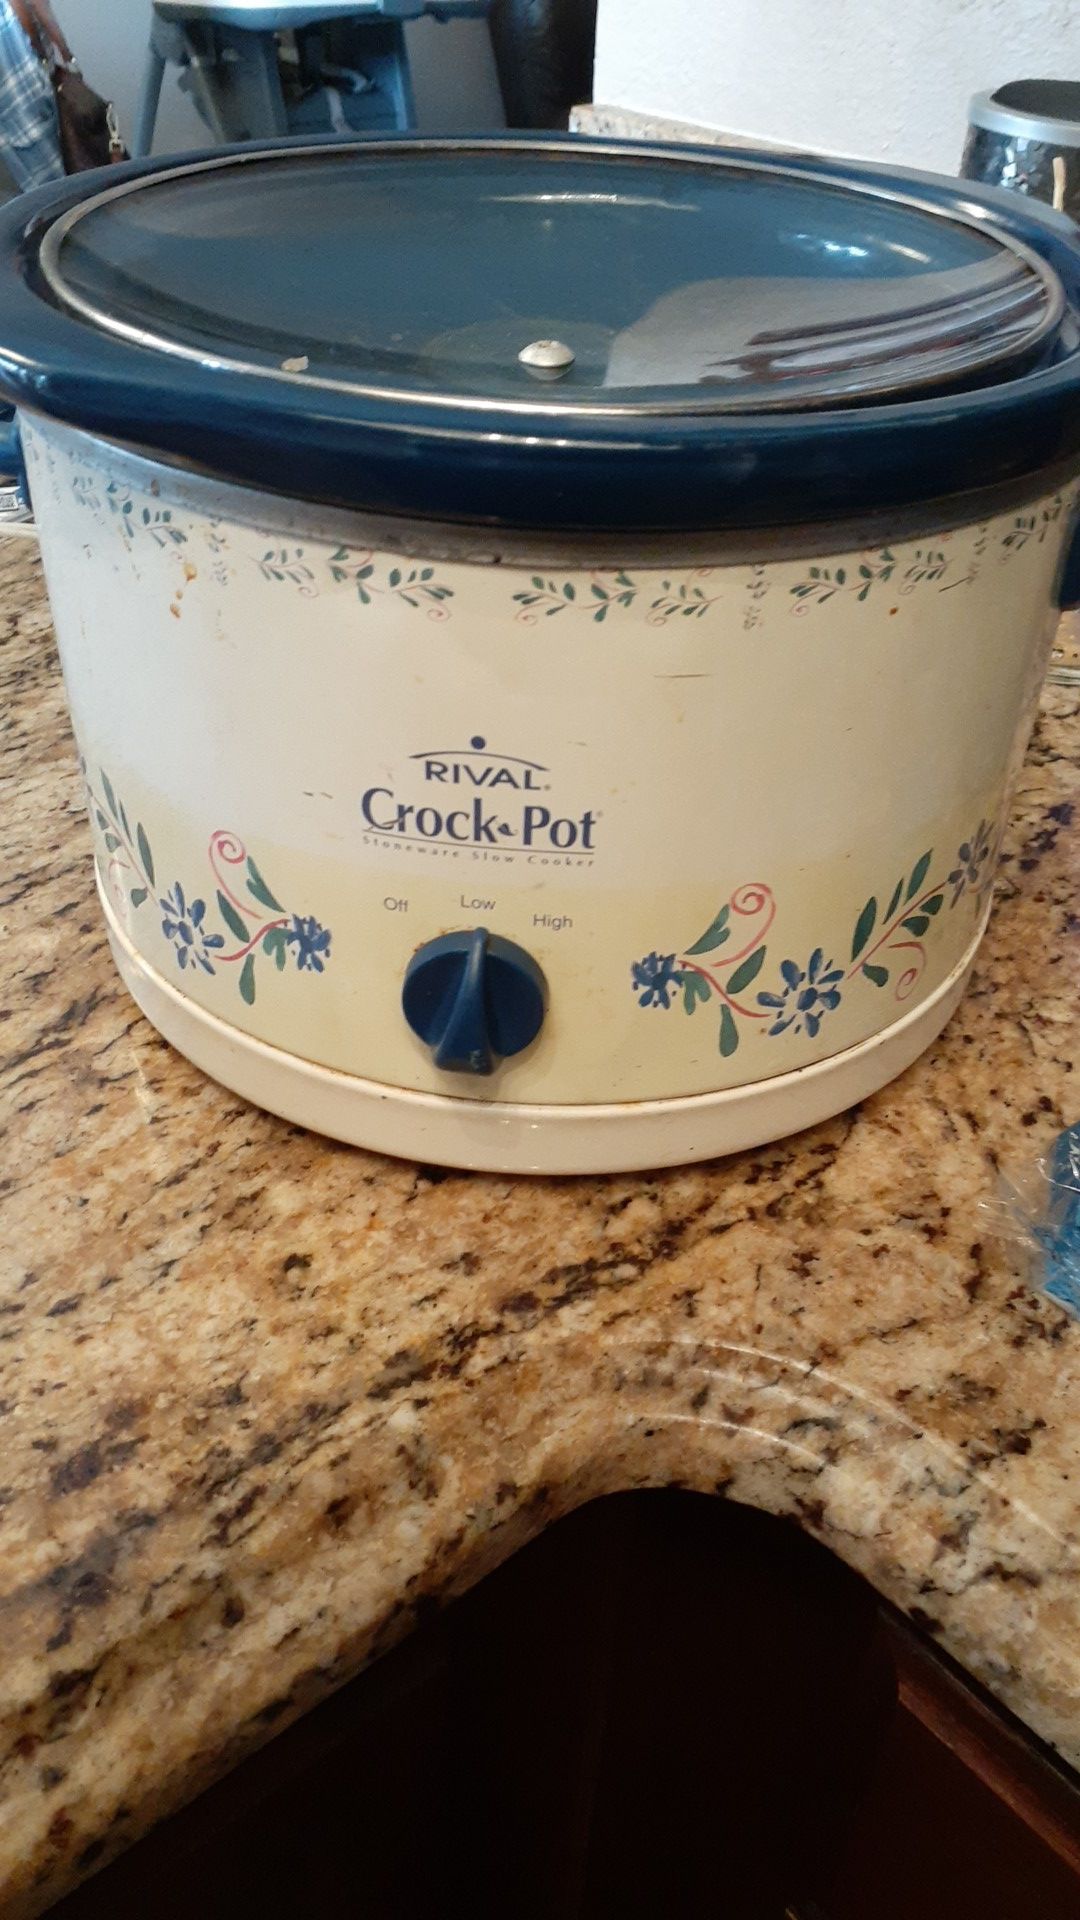 Crock pot works great